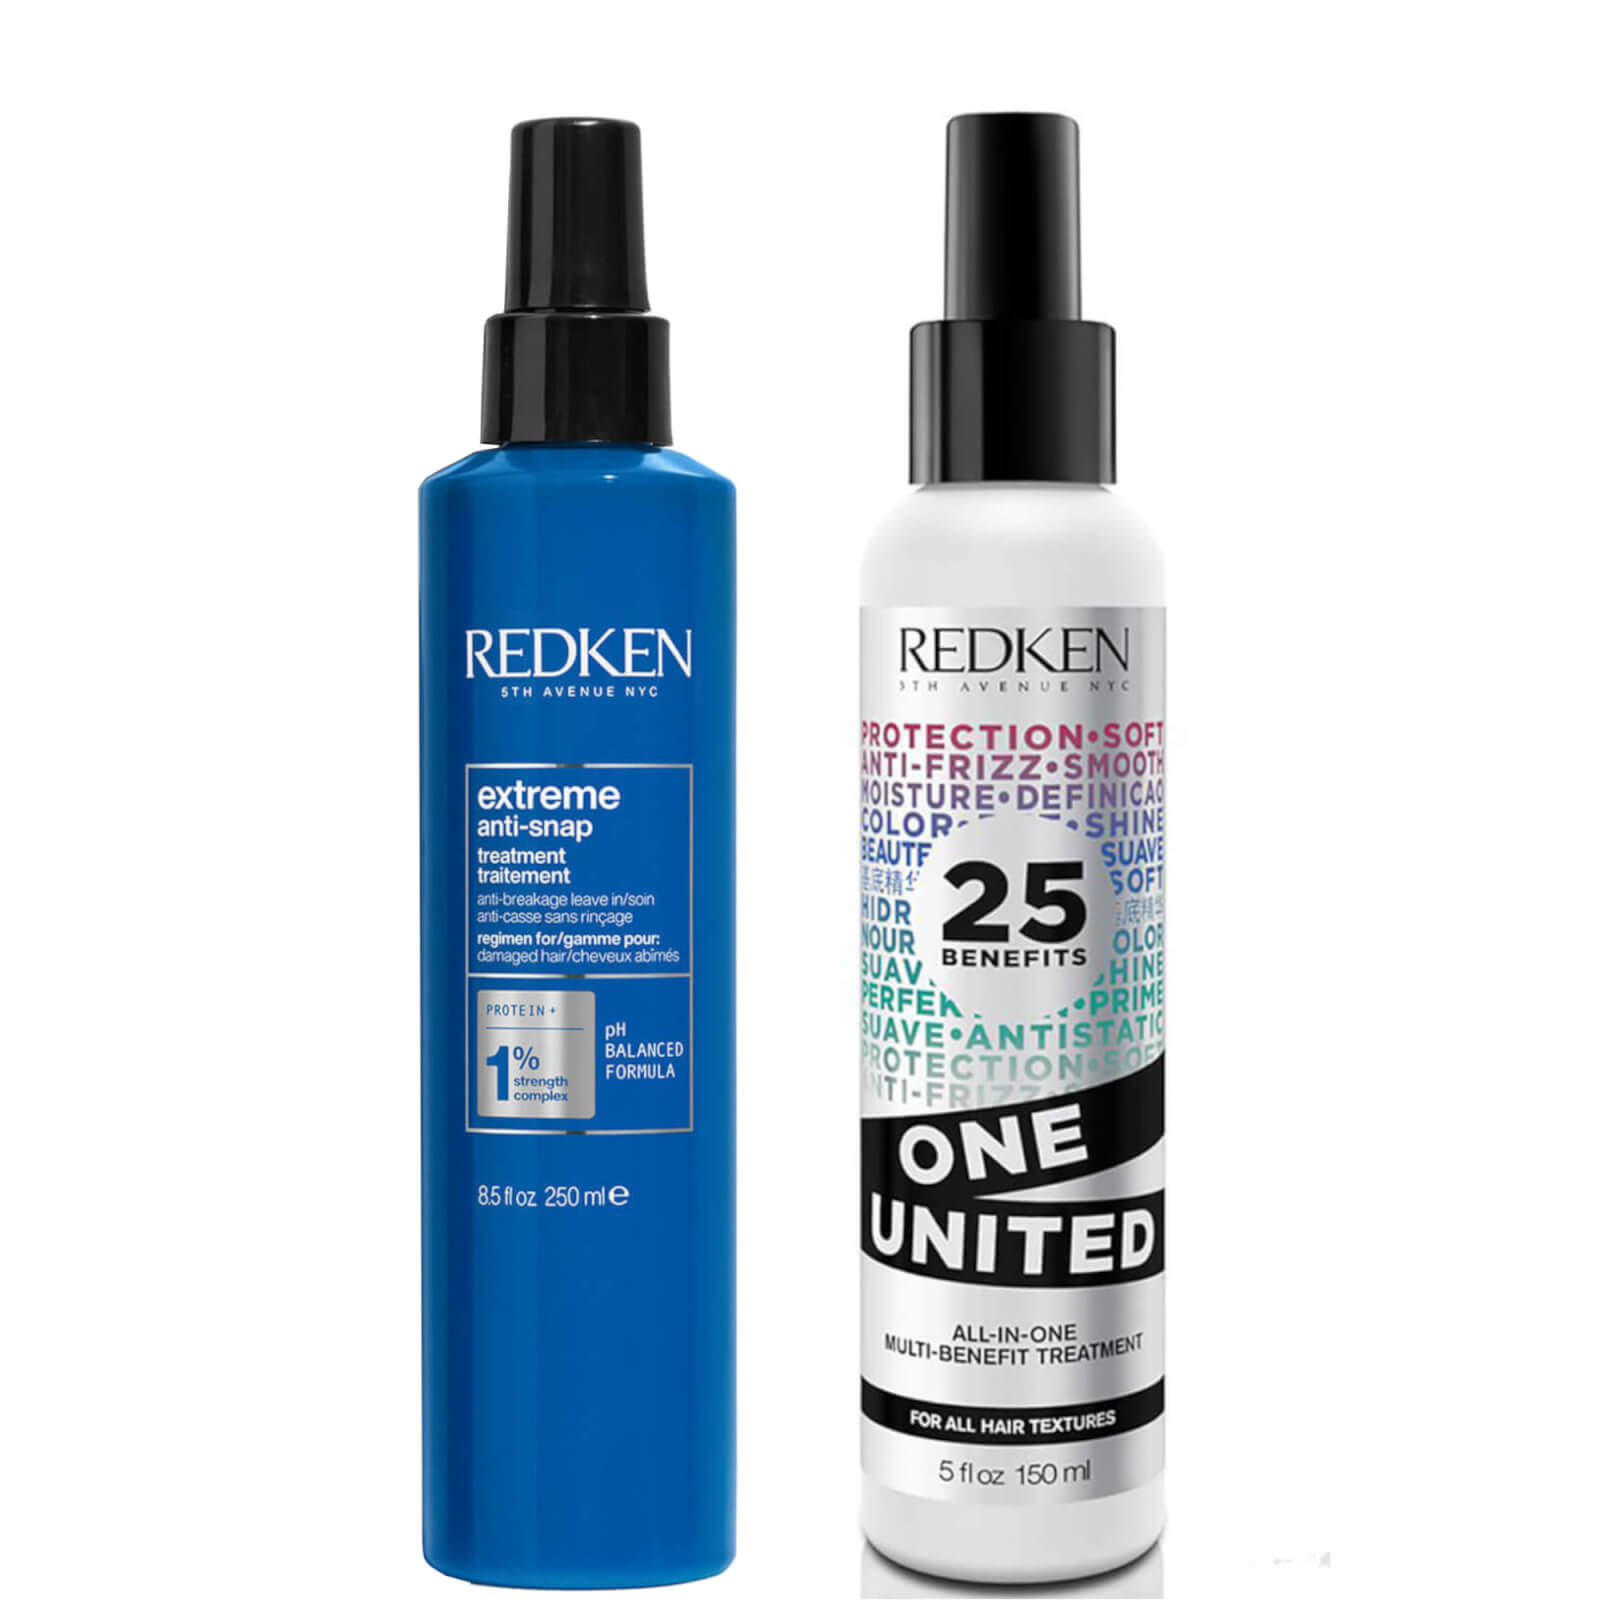 Redken Extreme Anti-Snap and One United Hair Treatment Bundle von Redken